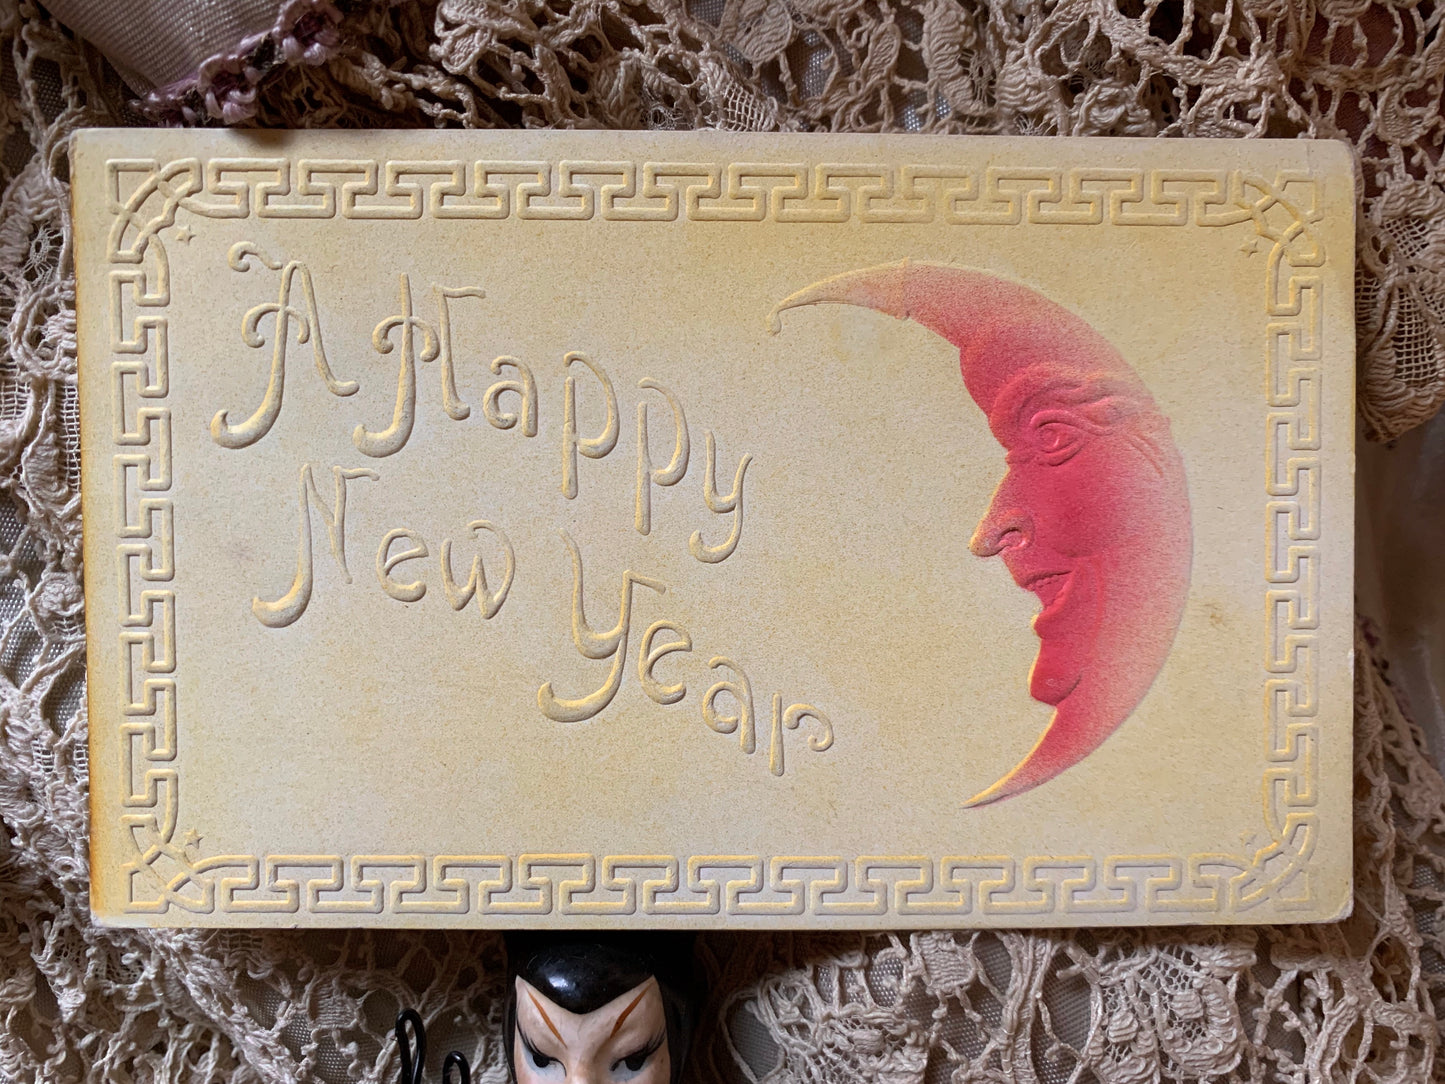 Antique Happy New Year postcard